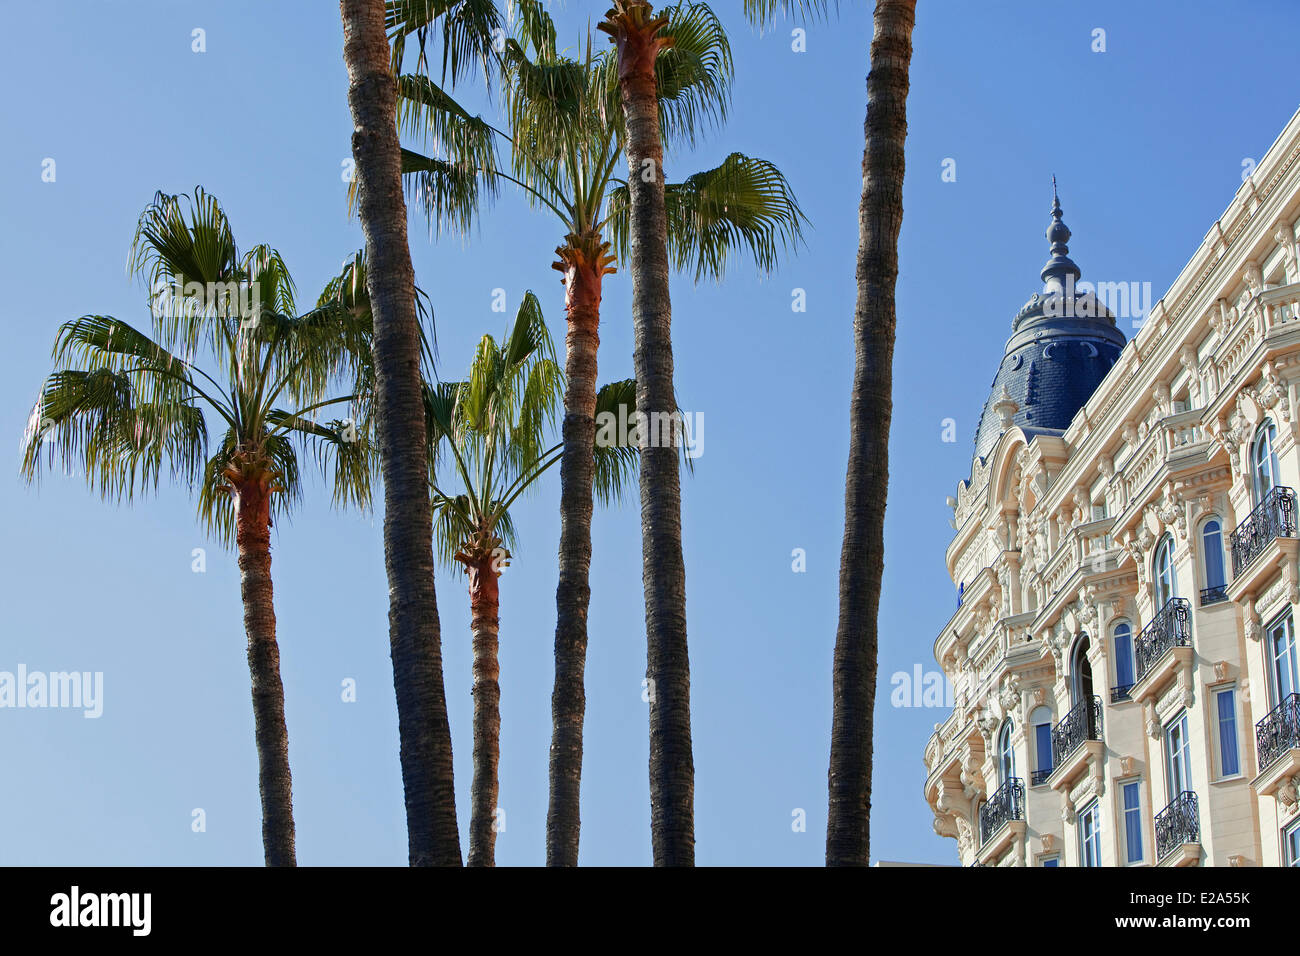 France, Alpes Maritimes, Cannes, Hotel Carlton, Compulsory Mention Stock Photo